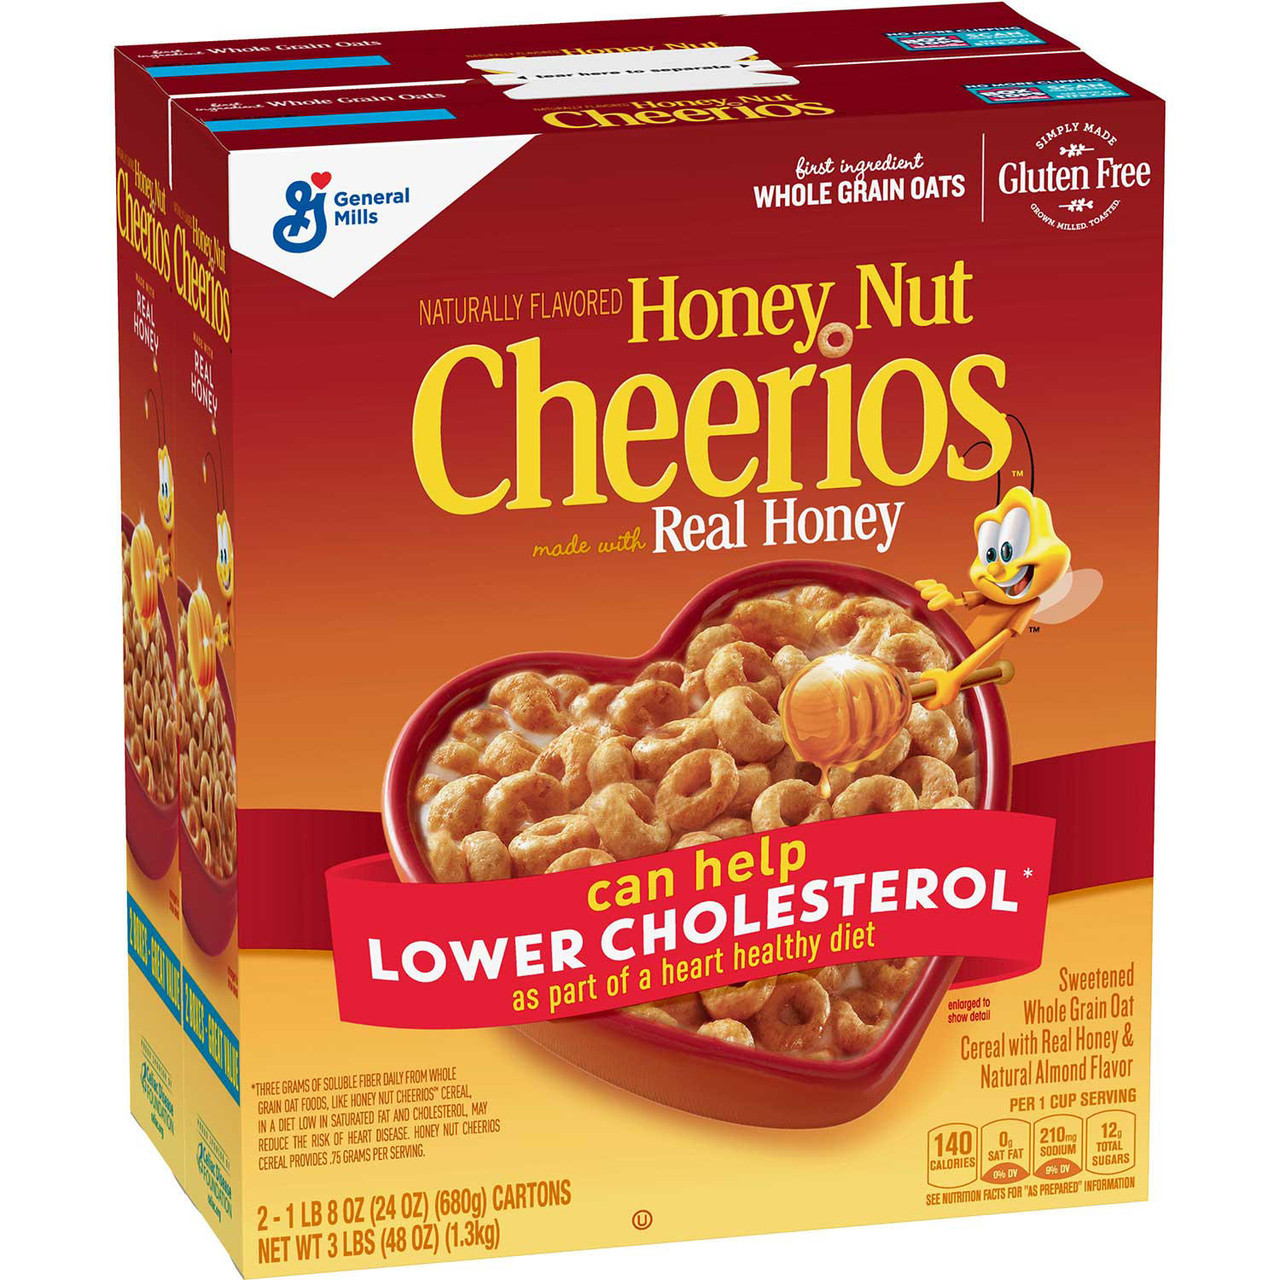 Honey Nut Cheerios Gluten-Free Cereal (24 oz., 2 pk.) - *In Store